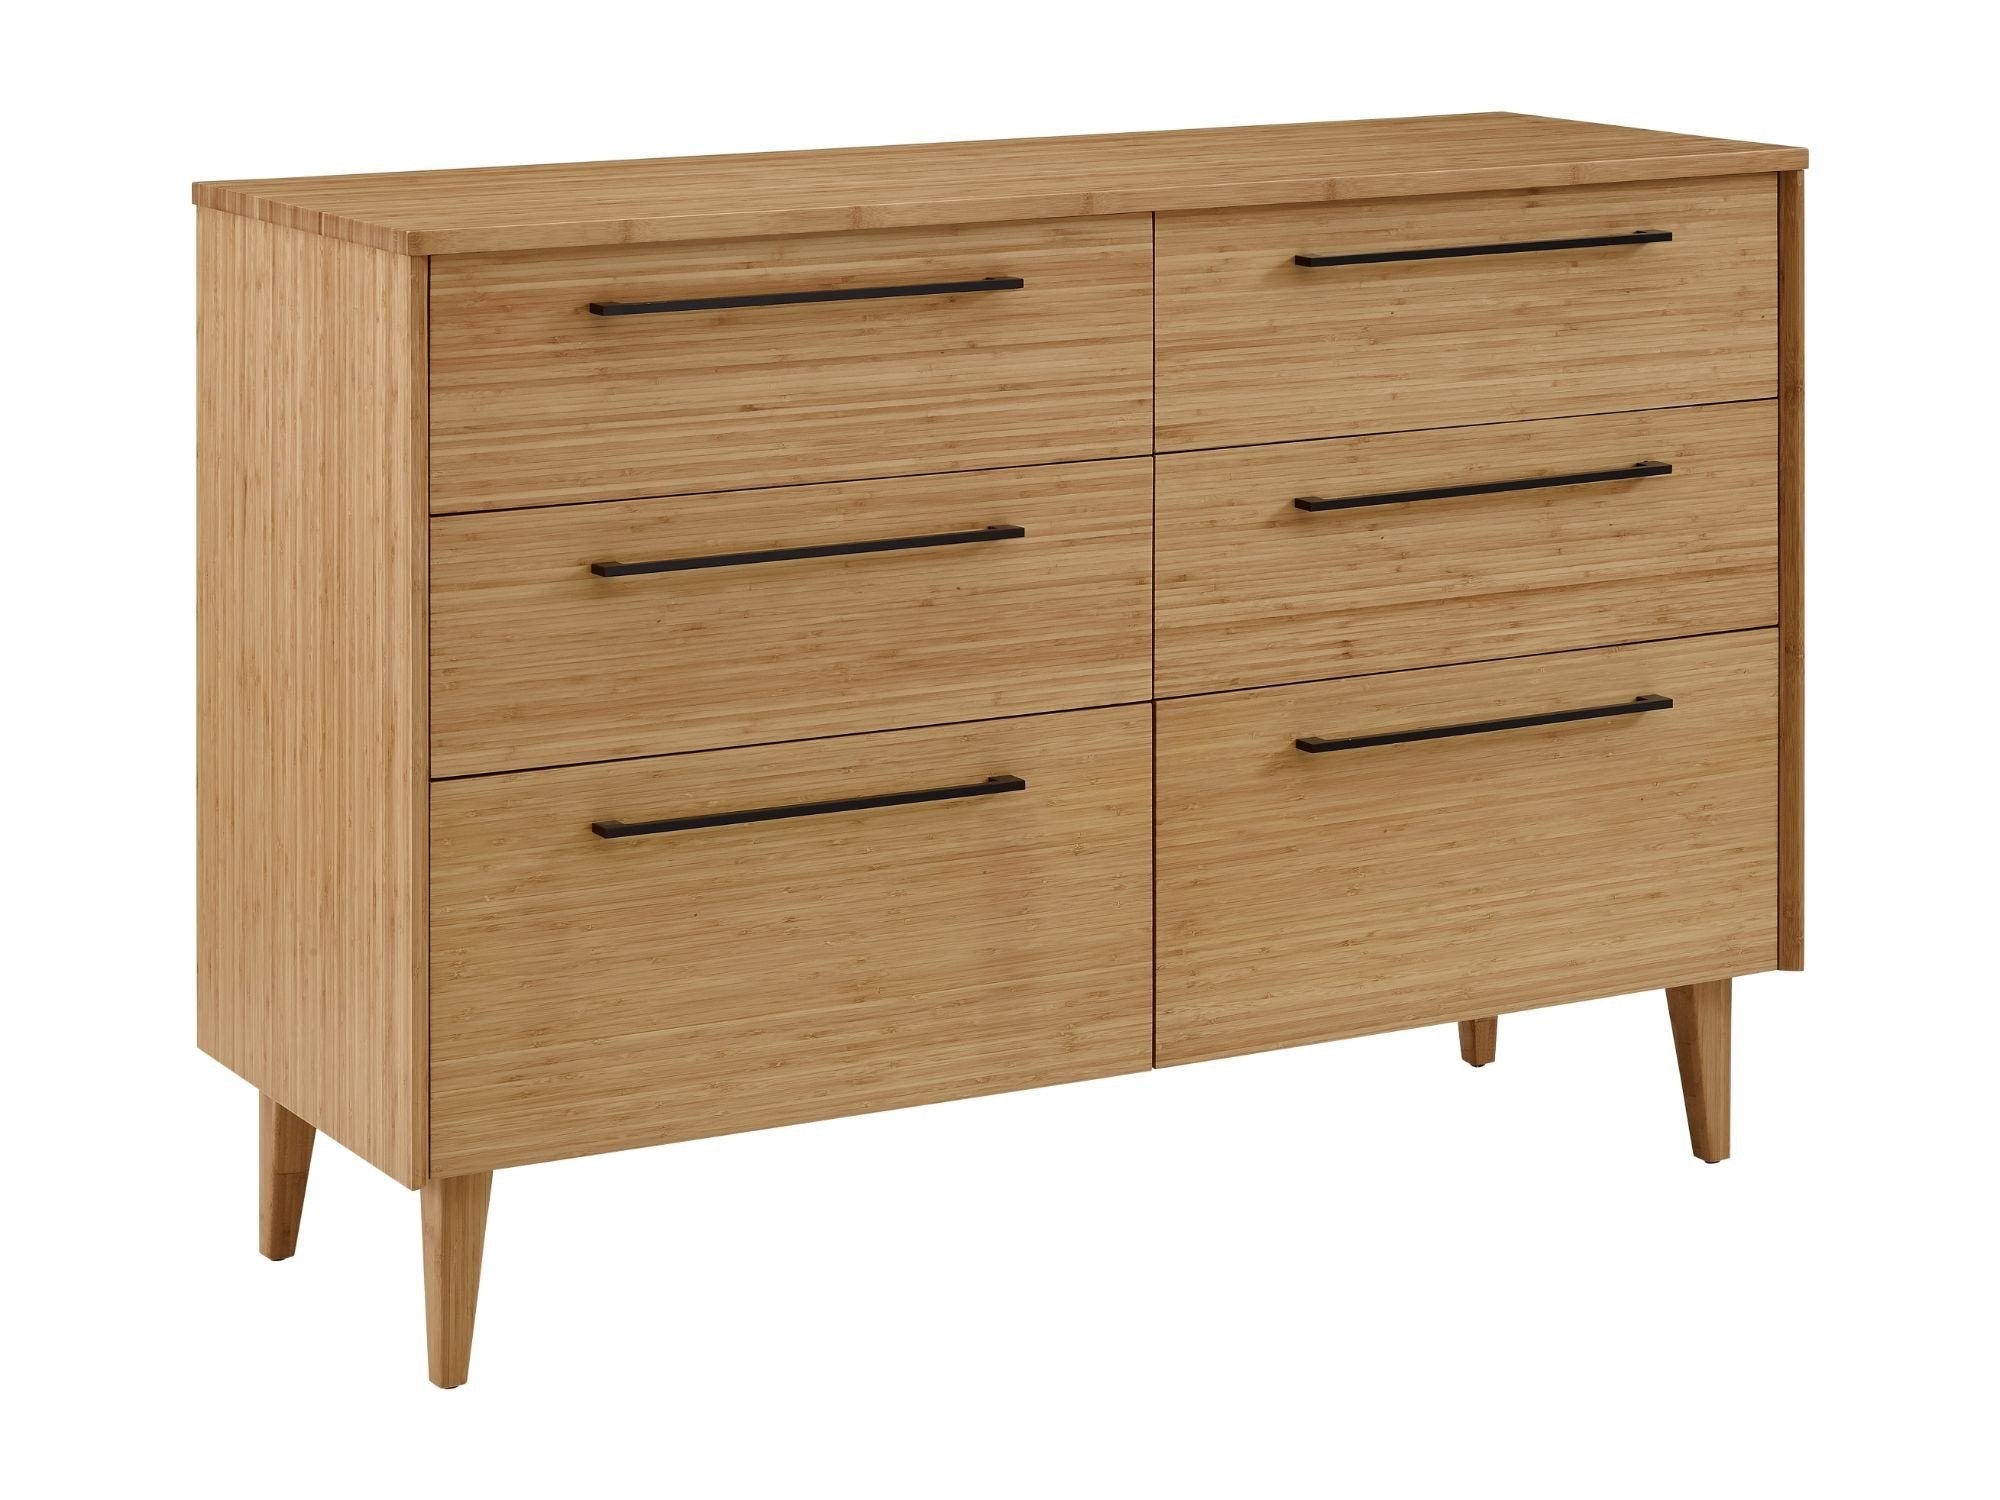 Sienna Six Drawer Dresser, Caramelized Furniture Greenington 